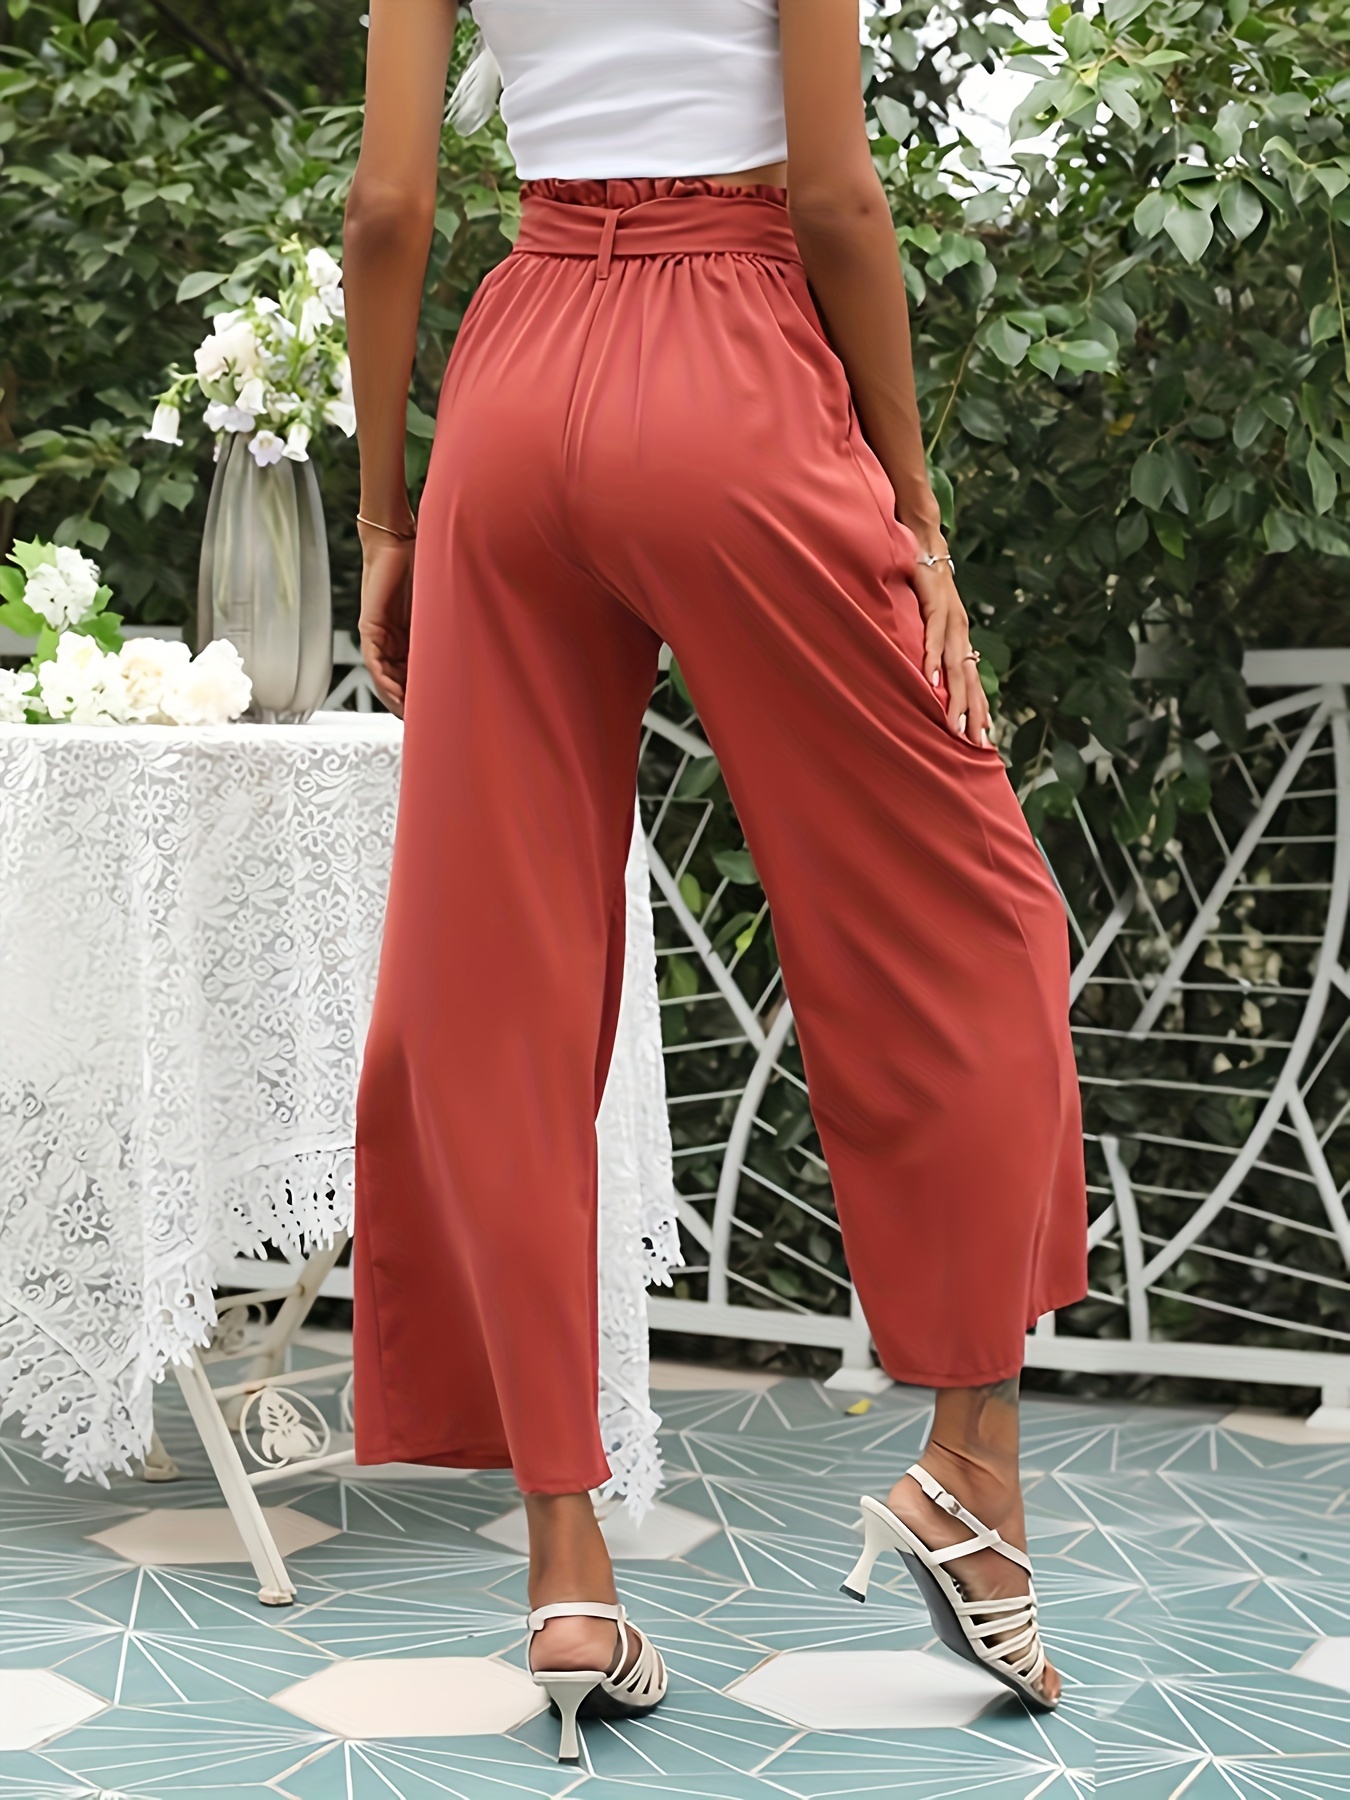 gvdentm Maternity Pants Womens Wide Leg Palazzo Pajama Pants High Waist  Tied Belt Beach Boho Loose Yoga Long Trousers Trendy 